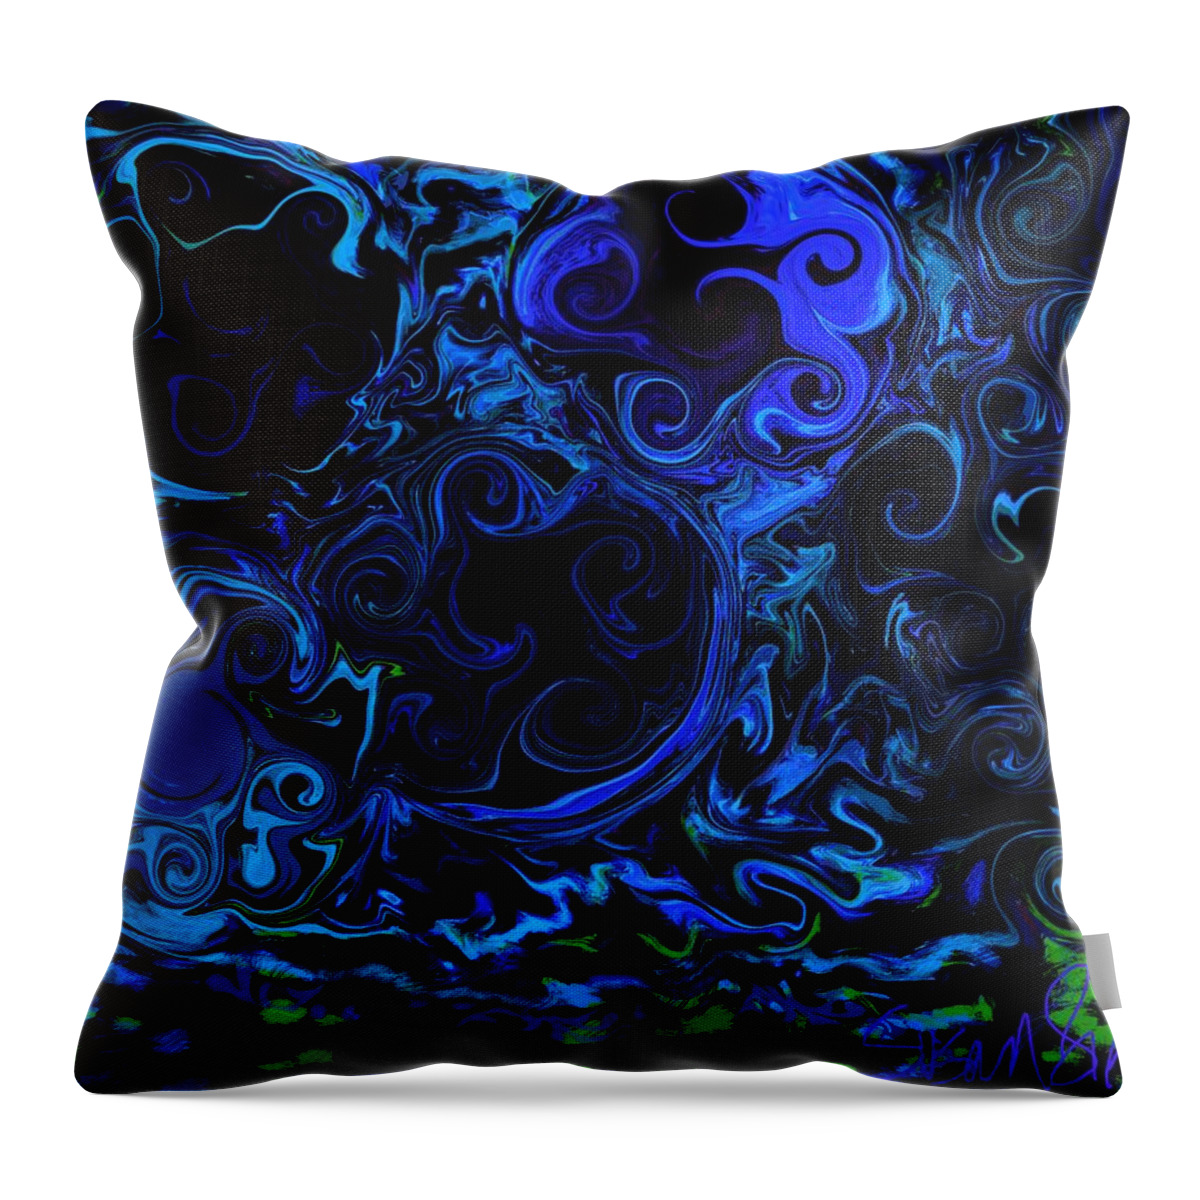 Swirl Throw Pillow featuring the digital art How Deep is Your Love by Susan Fielder